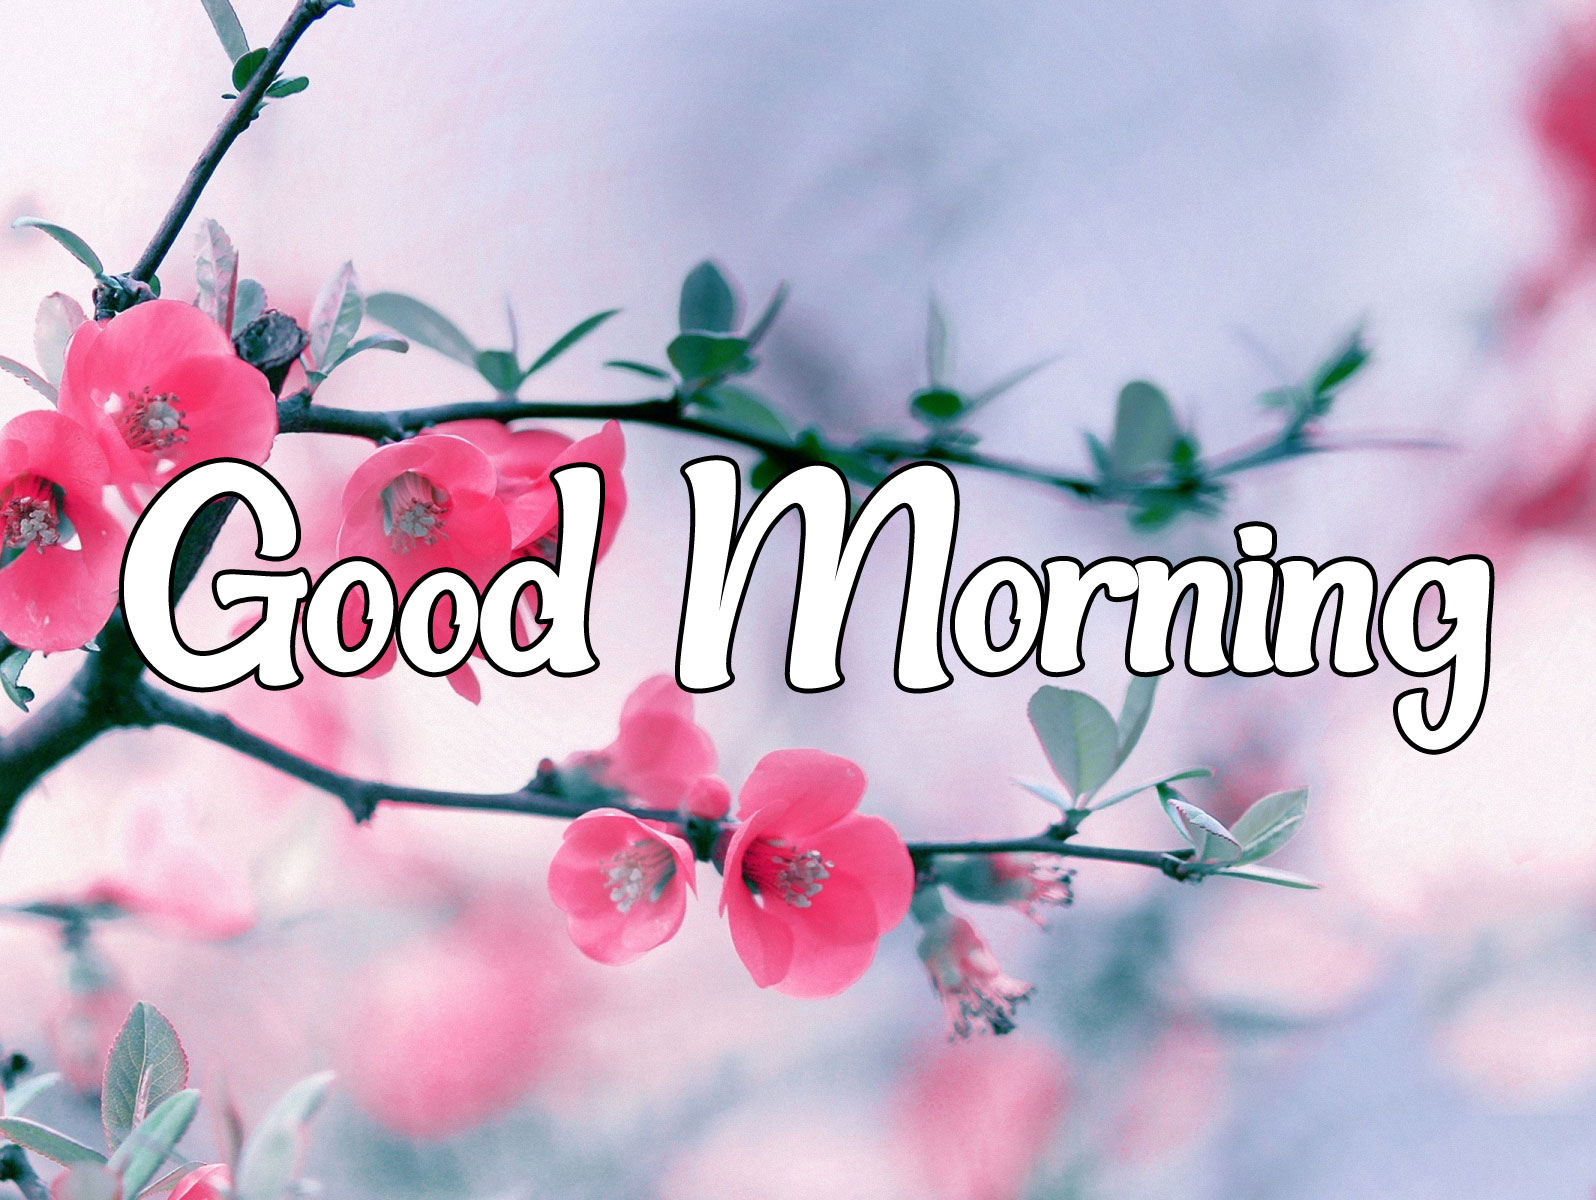 Flower Good morning Images (45) – Good Morning Images | Good ...